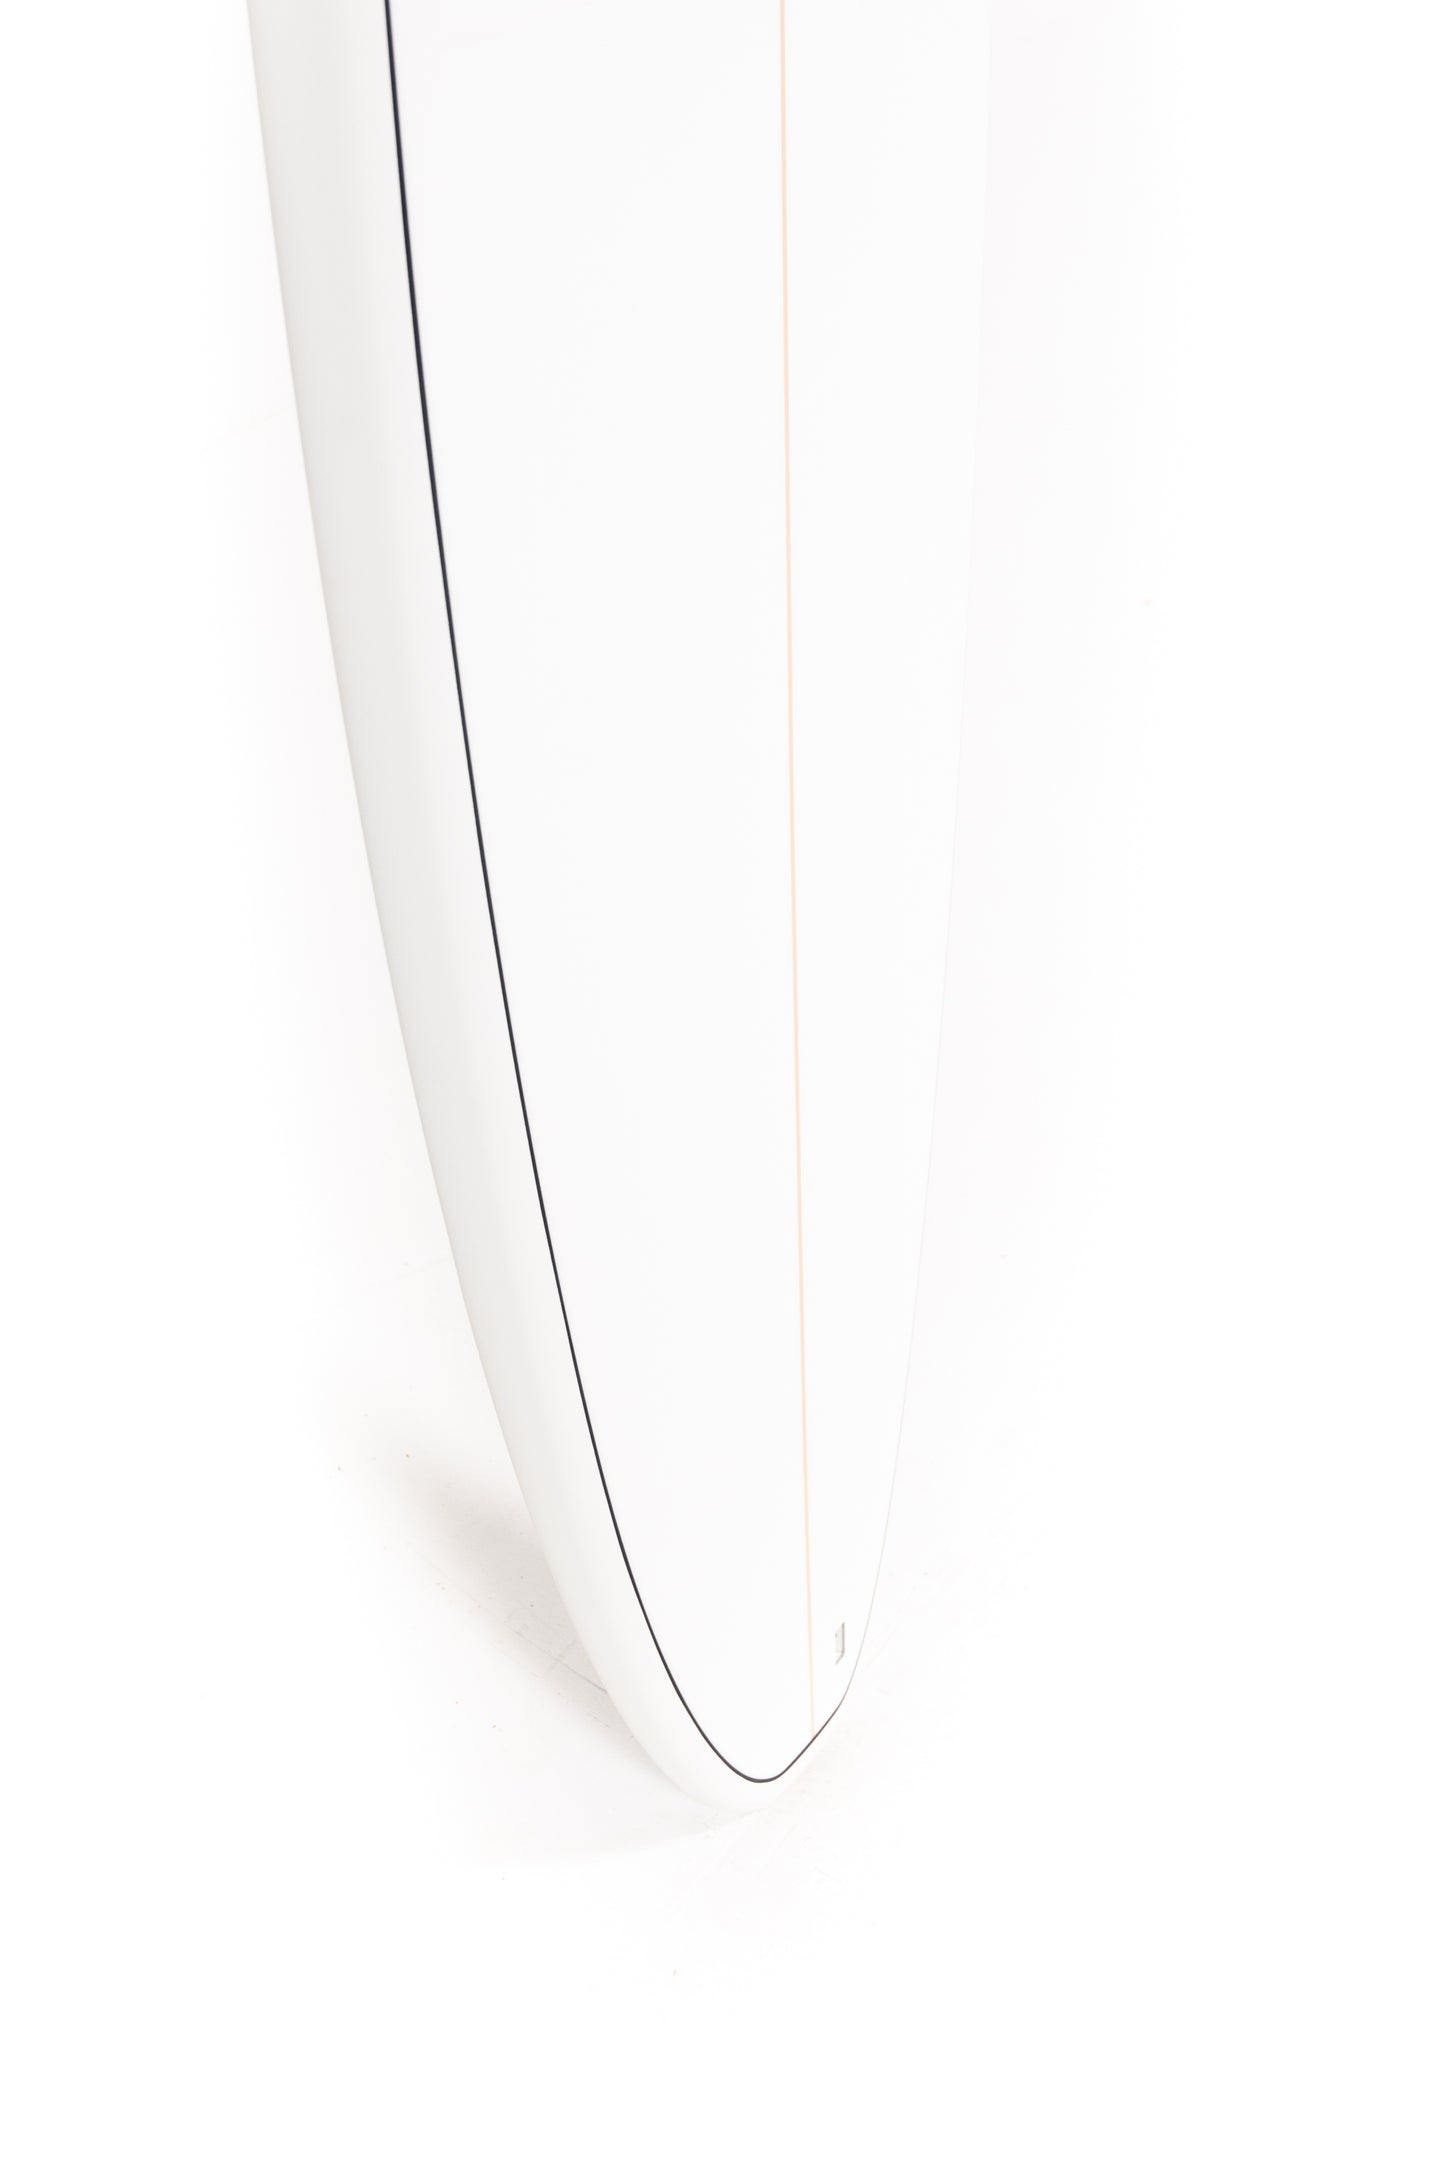 
                  
                    Pukas-Surf-Shop-Torq-Surfboards-V_-7_8_-white
                  
                